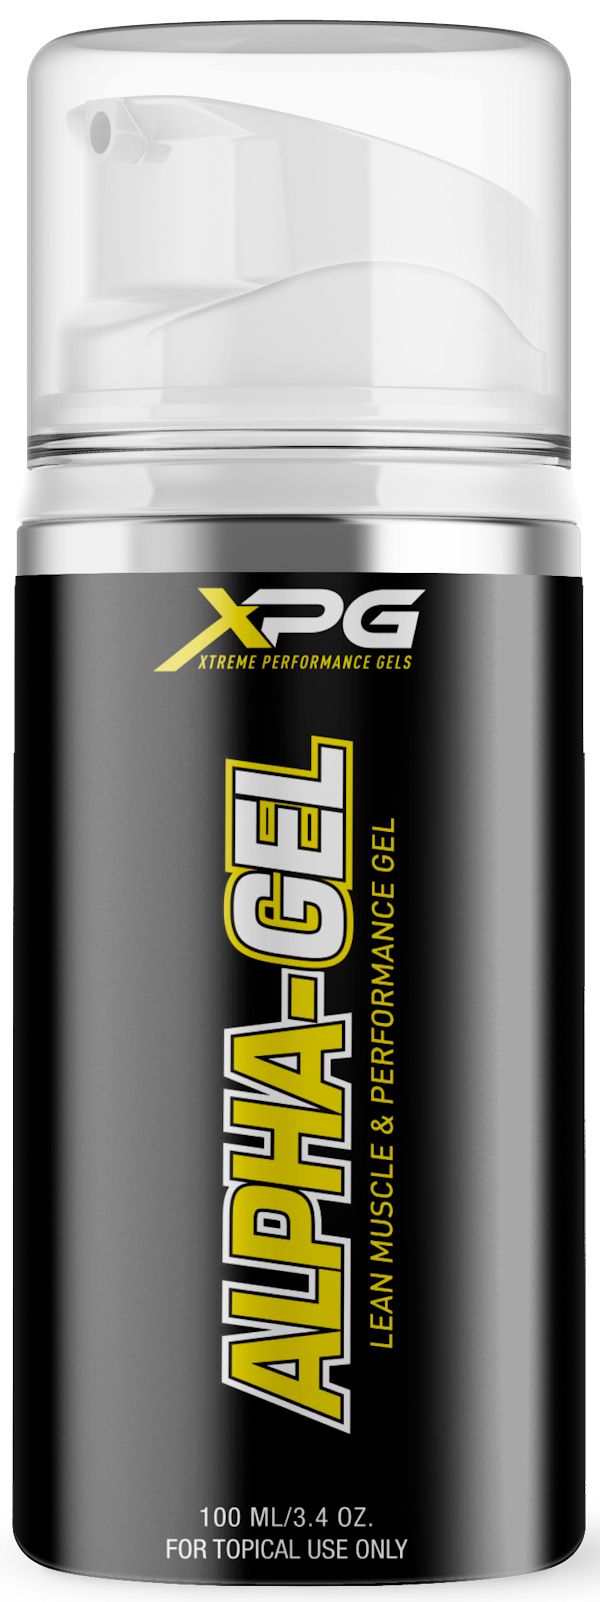 Xtreme Performance Gels Alpha Gel muscle